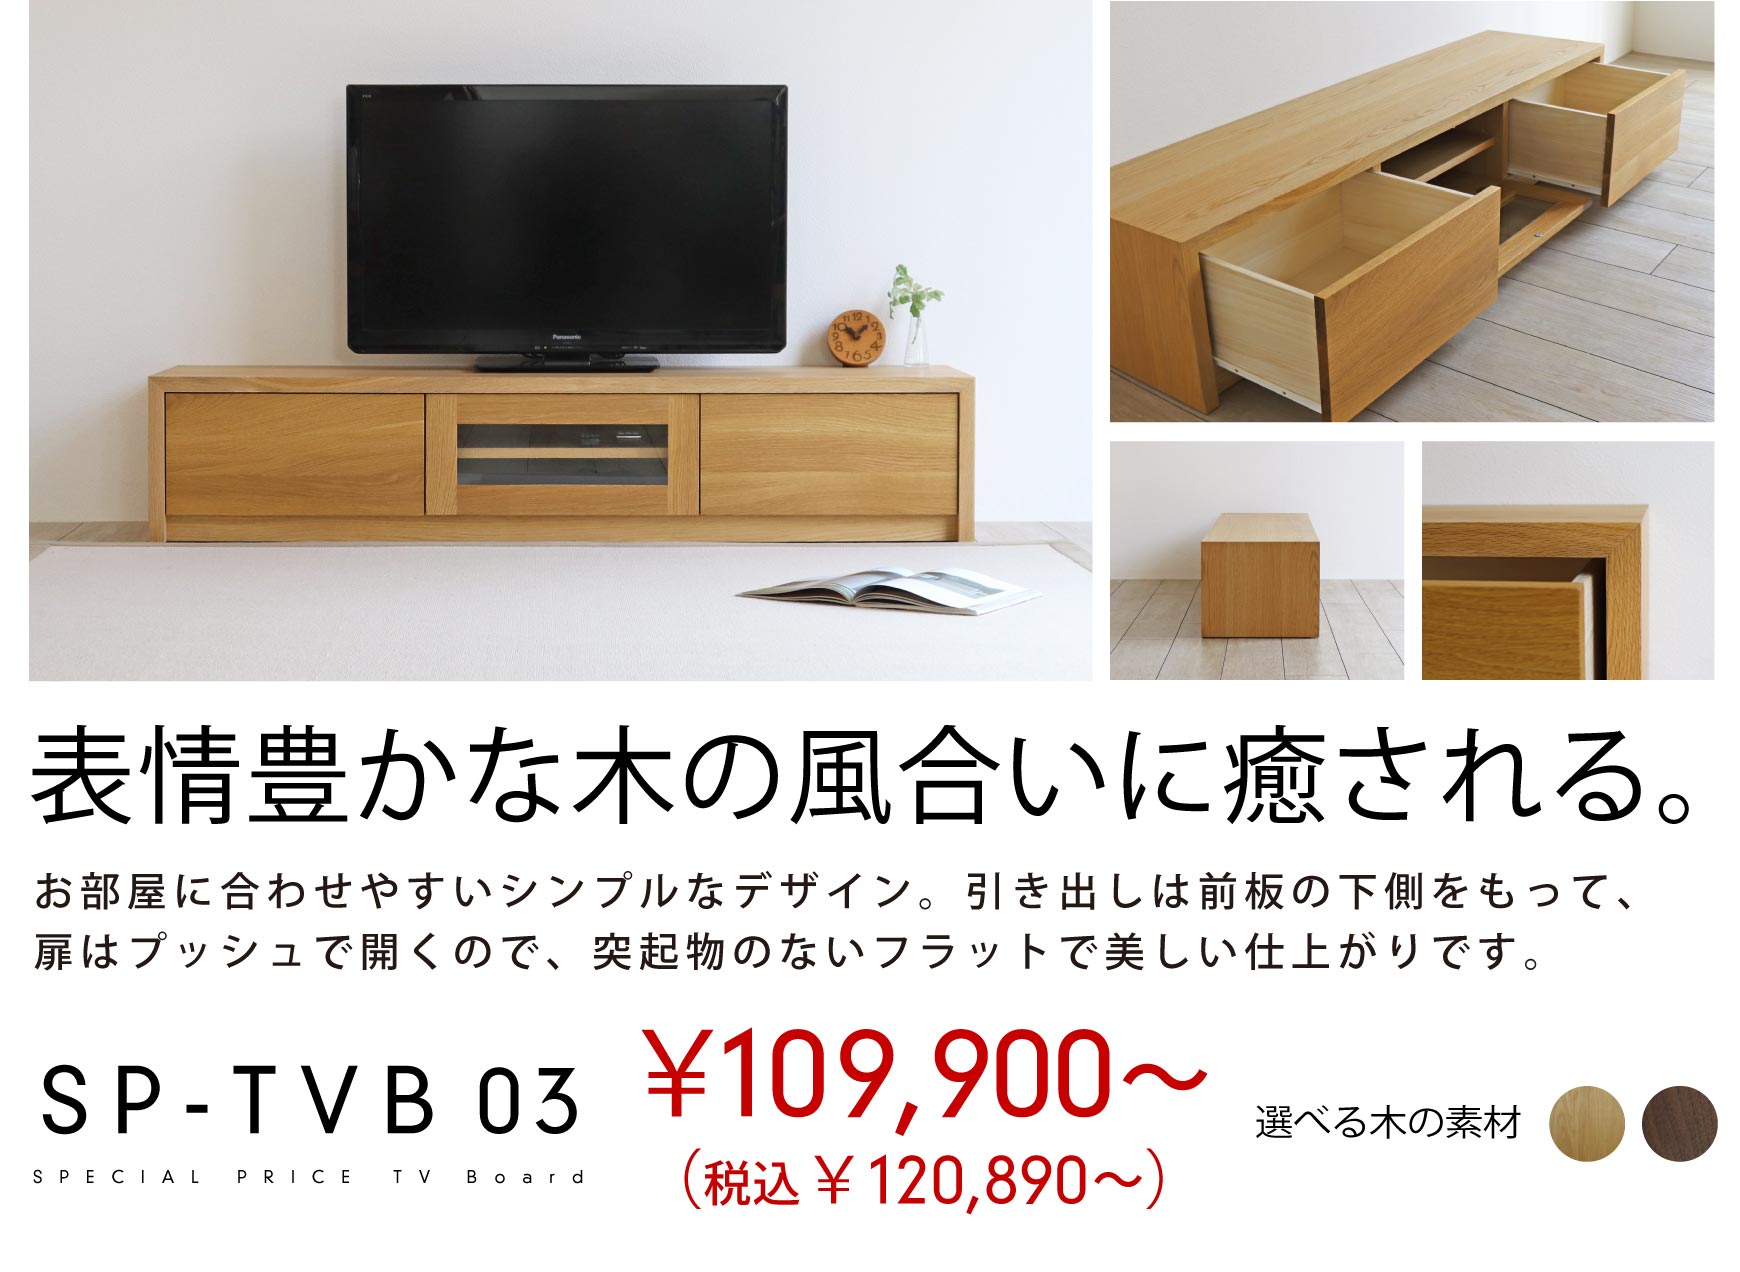 SP-TVB03 家具職人による丁寧な仕上がり、お買い求めやすいテレビボード